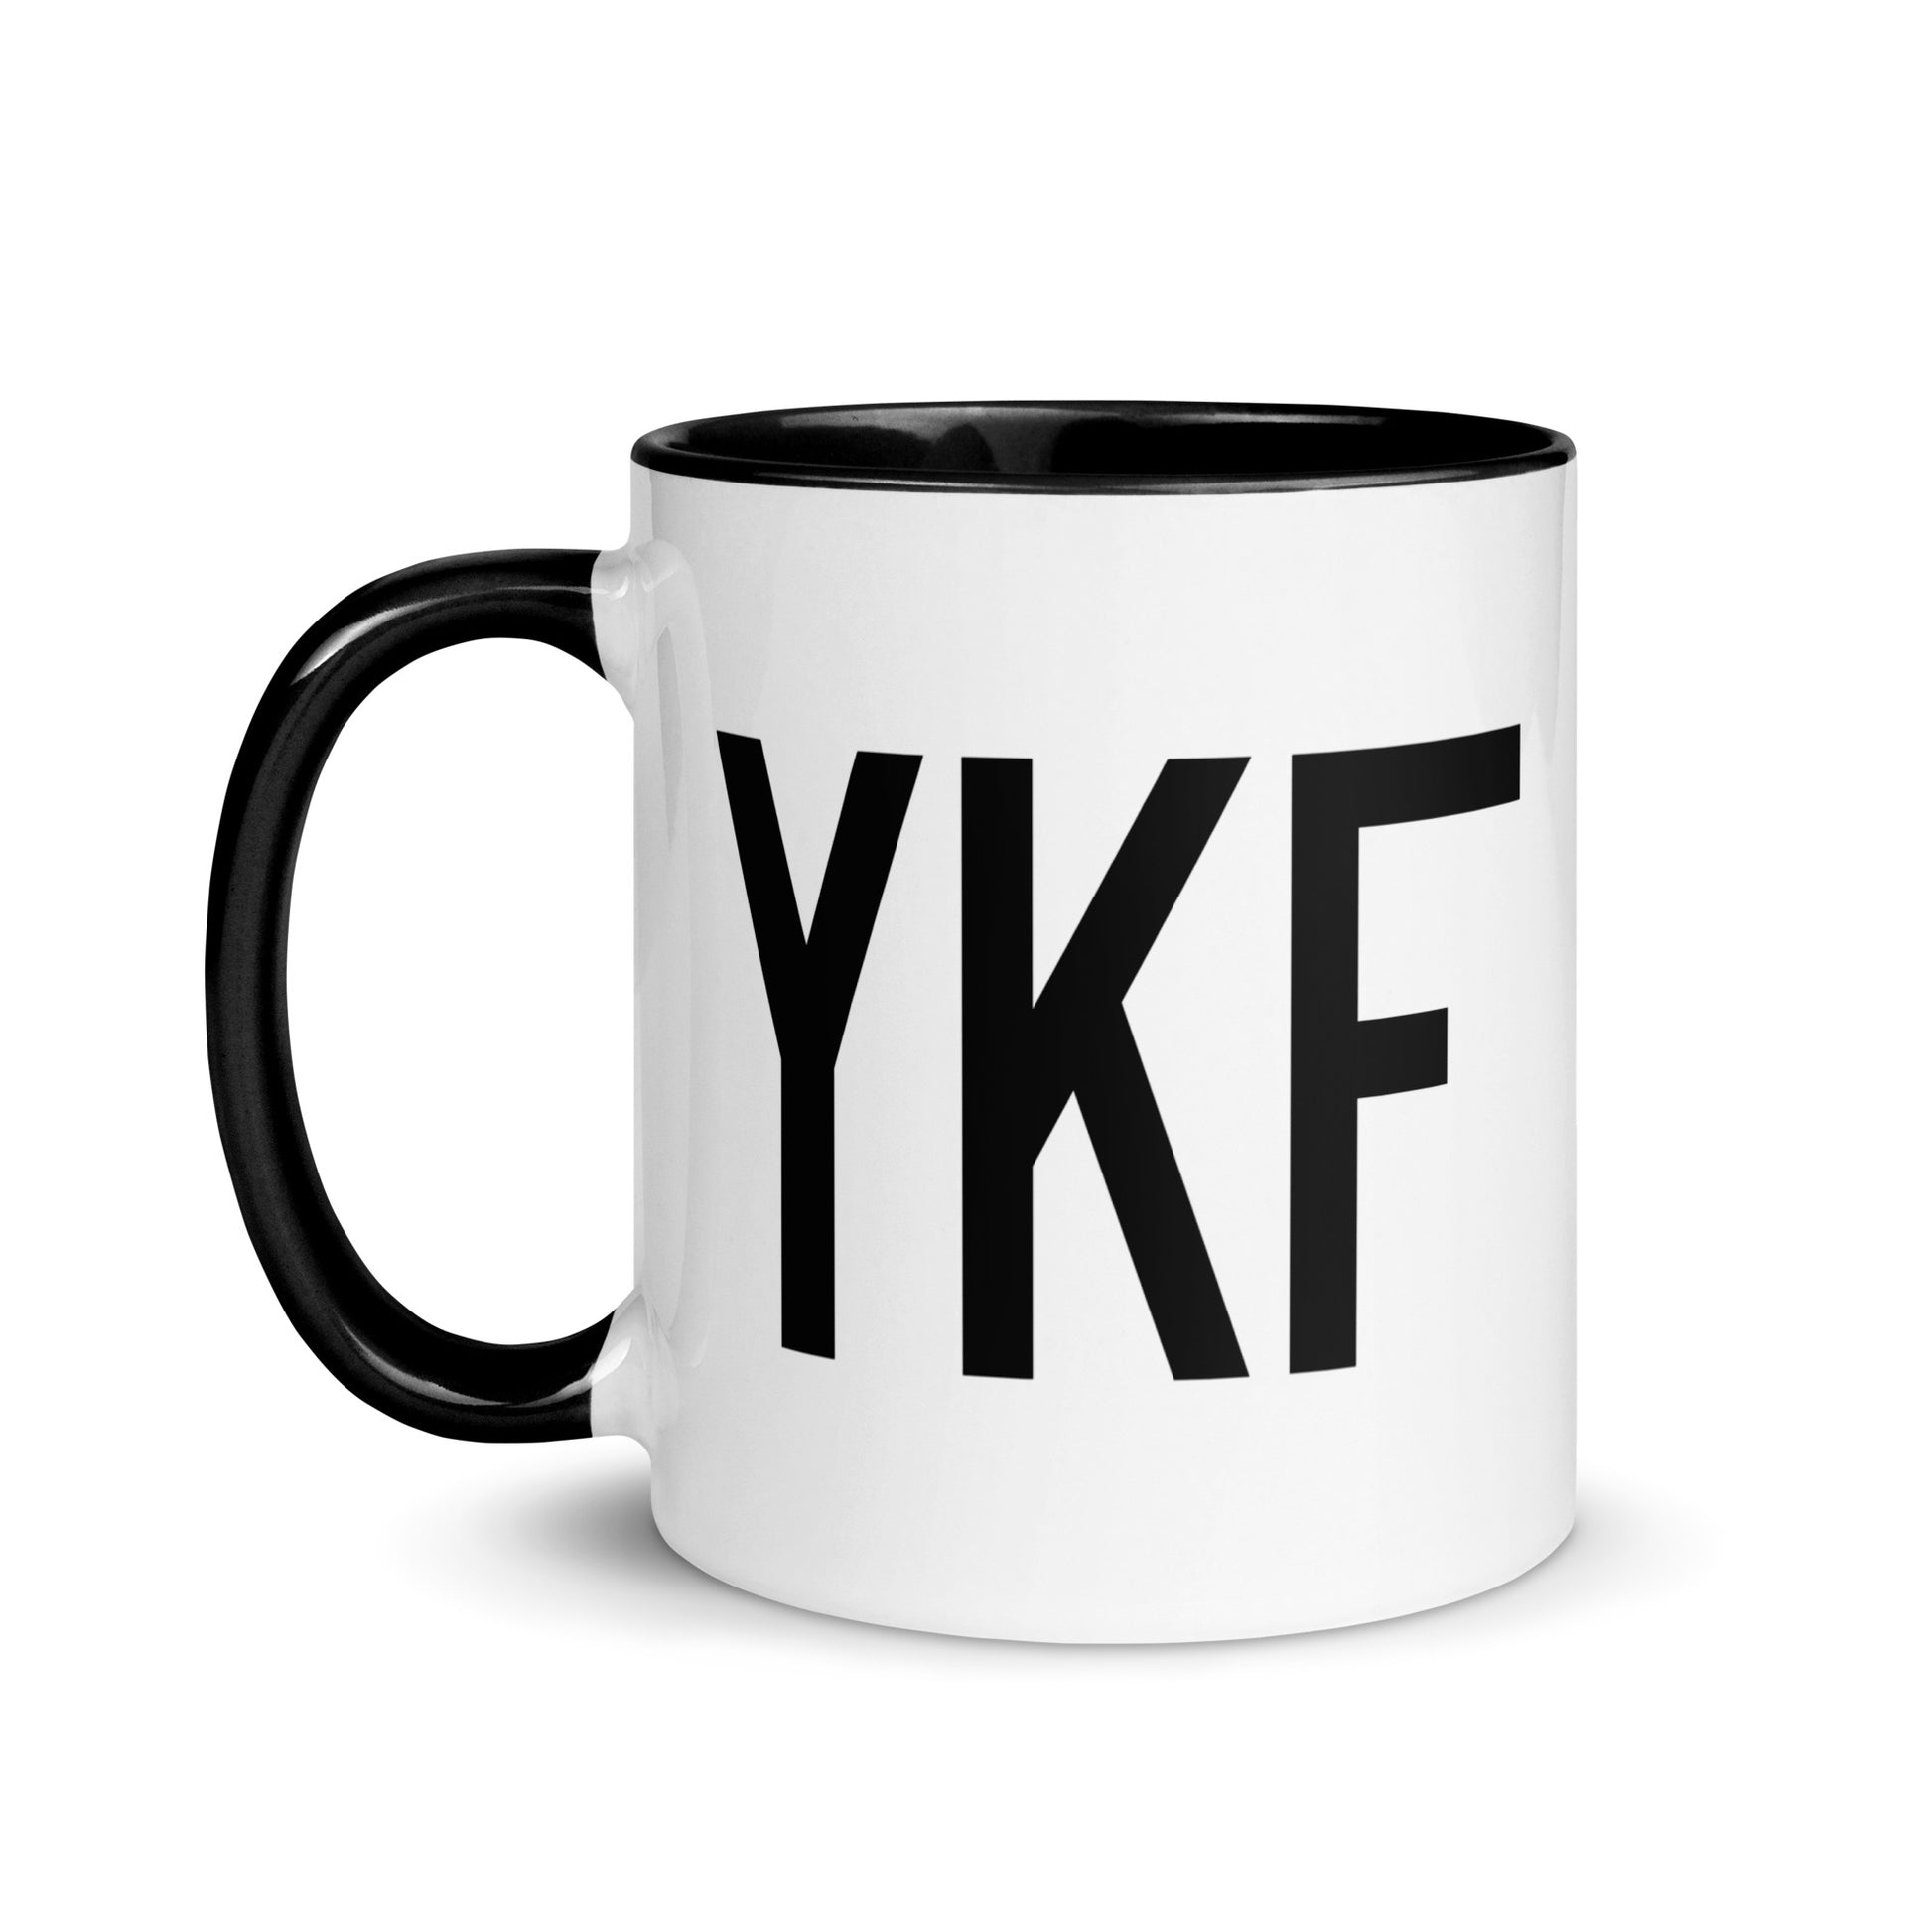 Aviation-Theme Coffee Mug - Black • YKF Waterloo • YHM Designs - Image 03